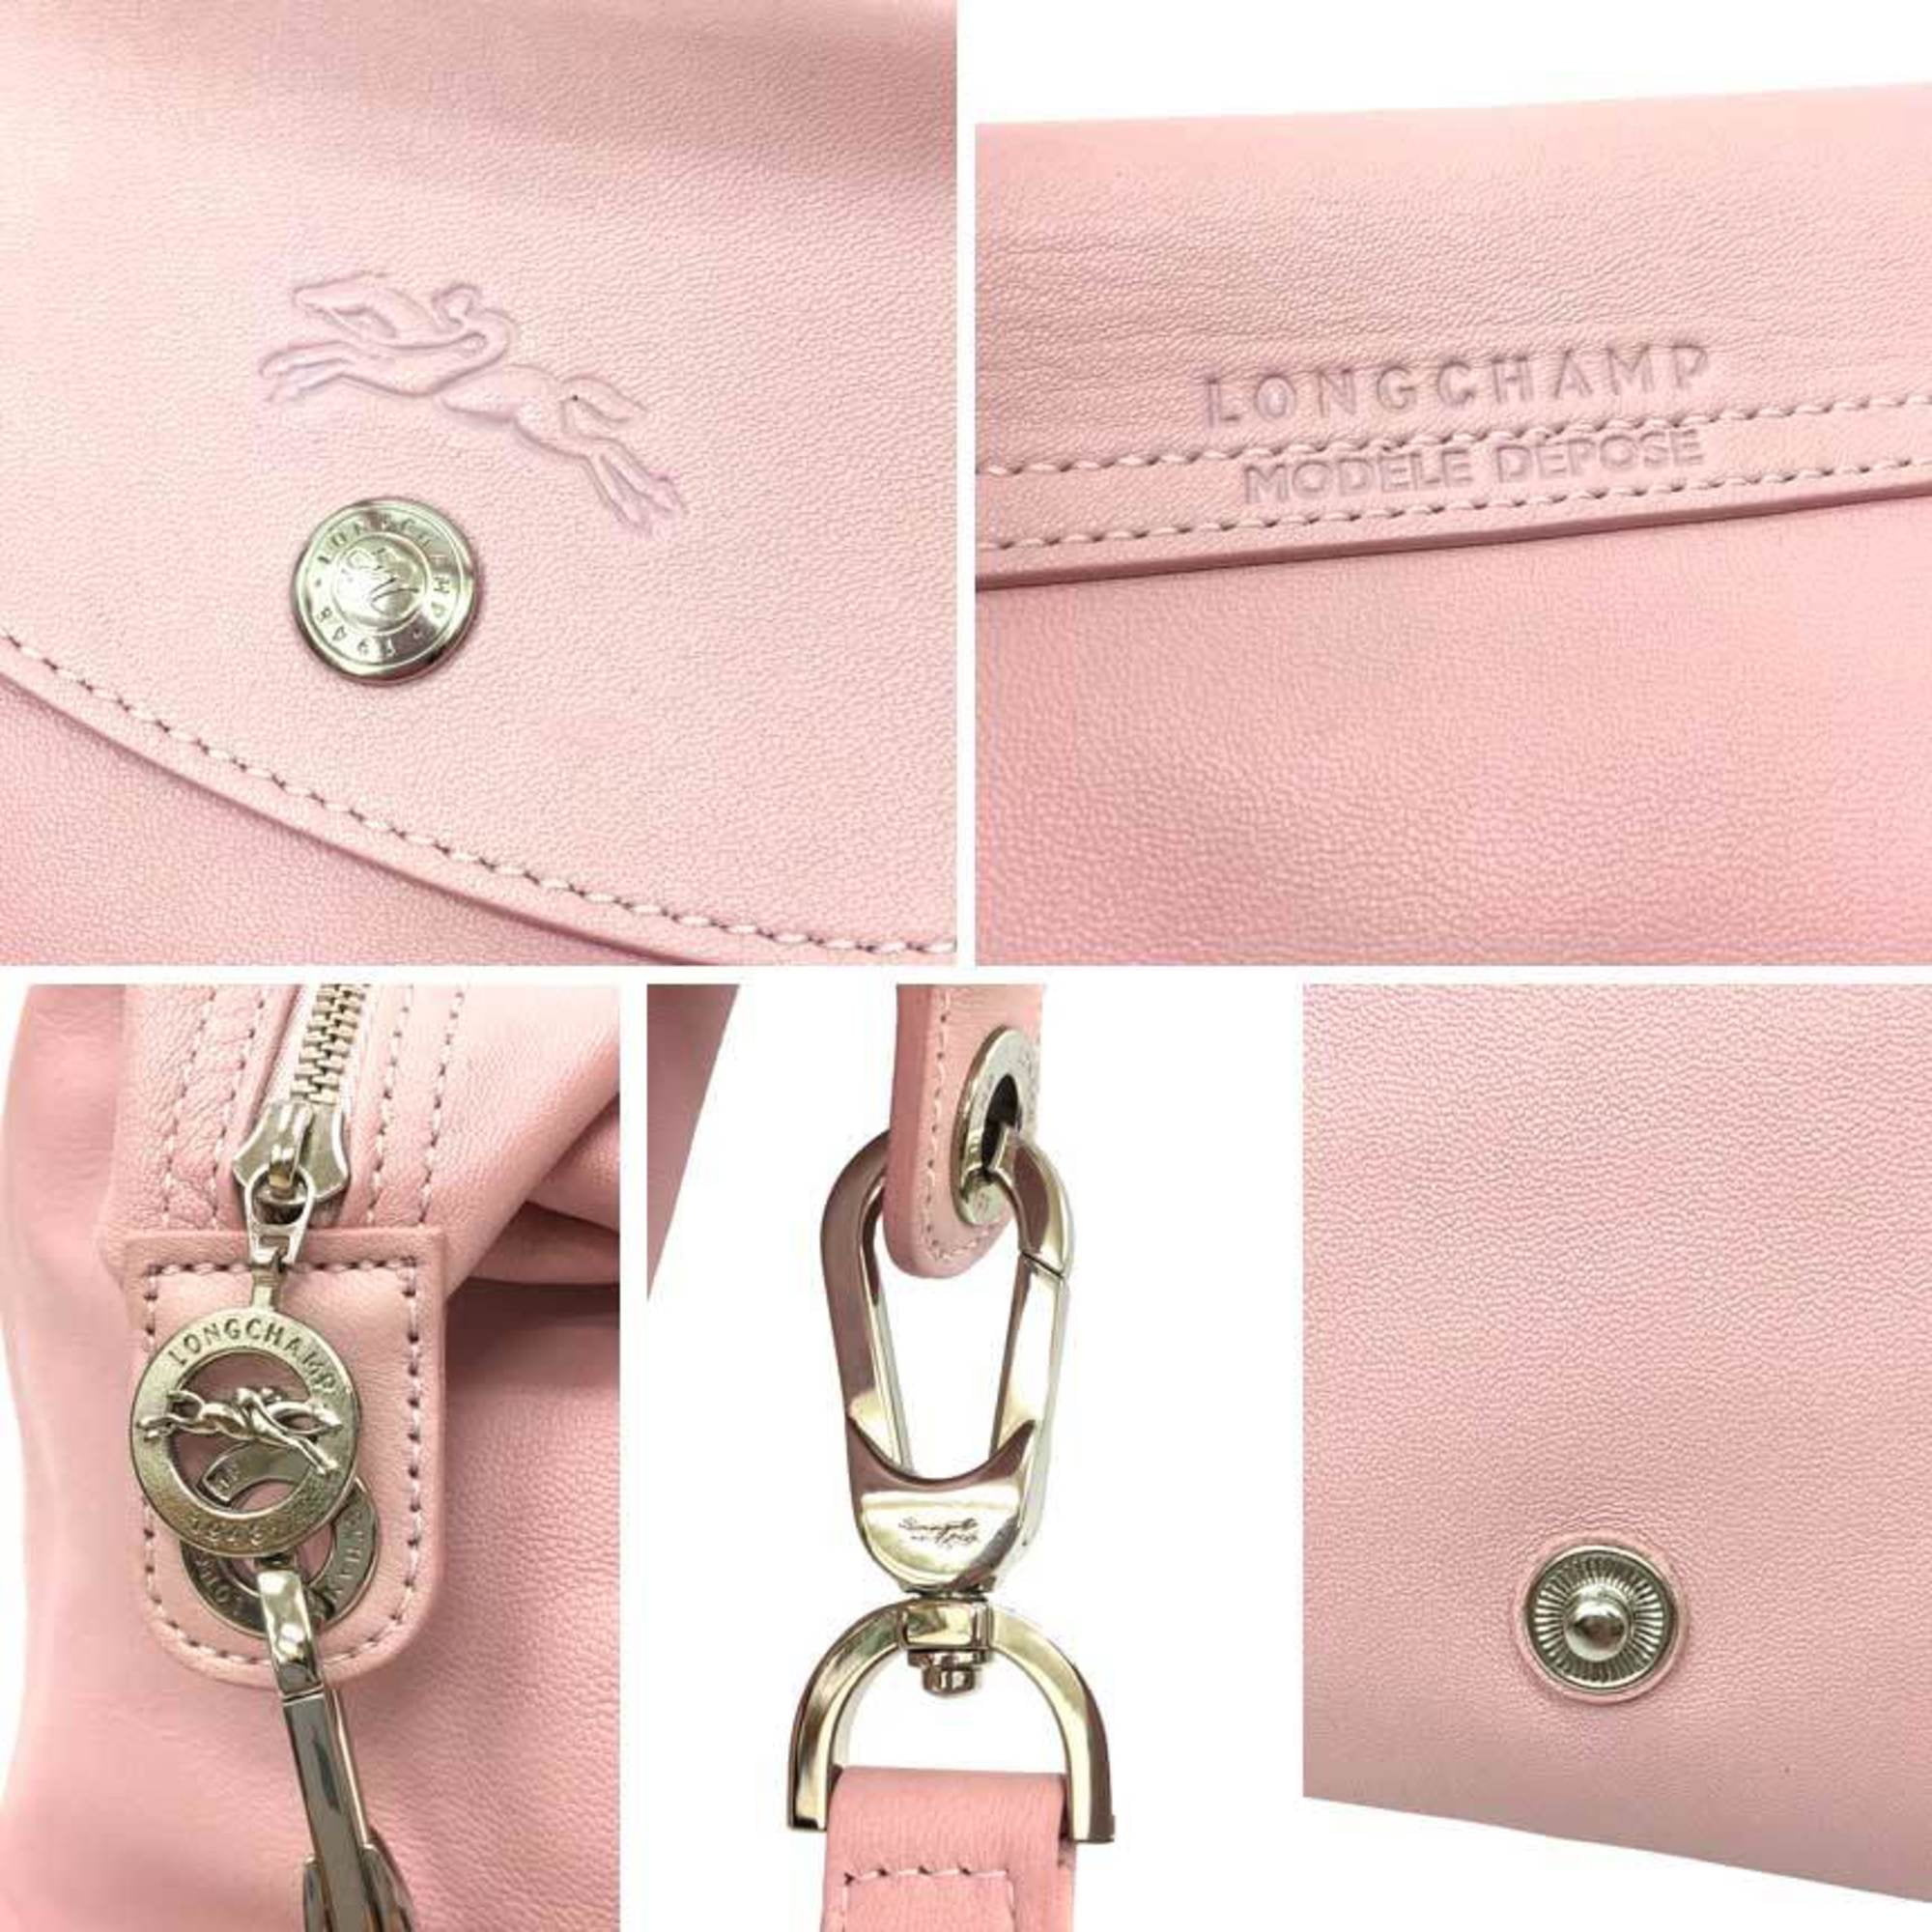 Longchamp Le Pliage Cuir+How to authenticate Longchamp Le Pliage Cuir bags